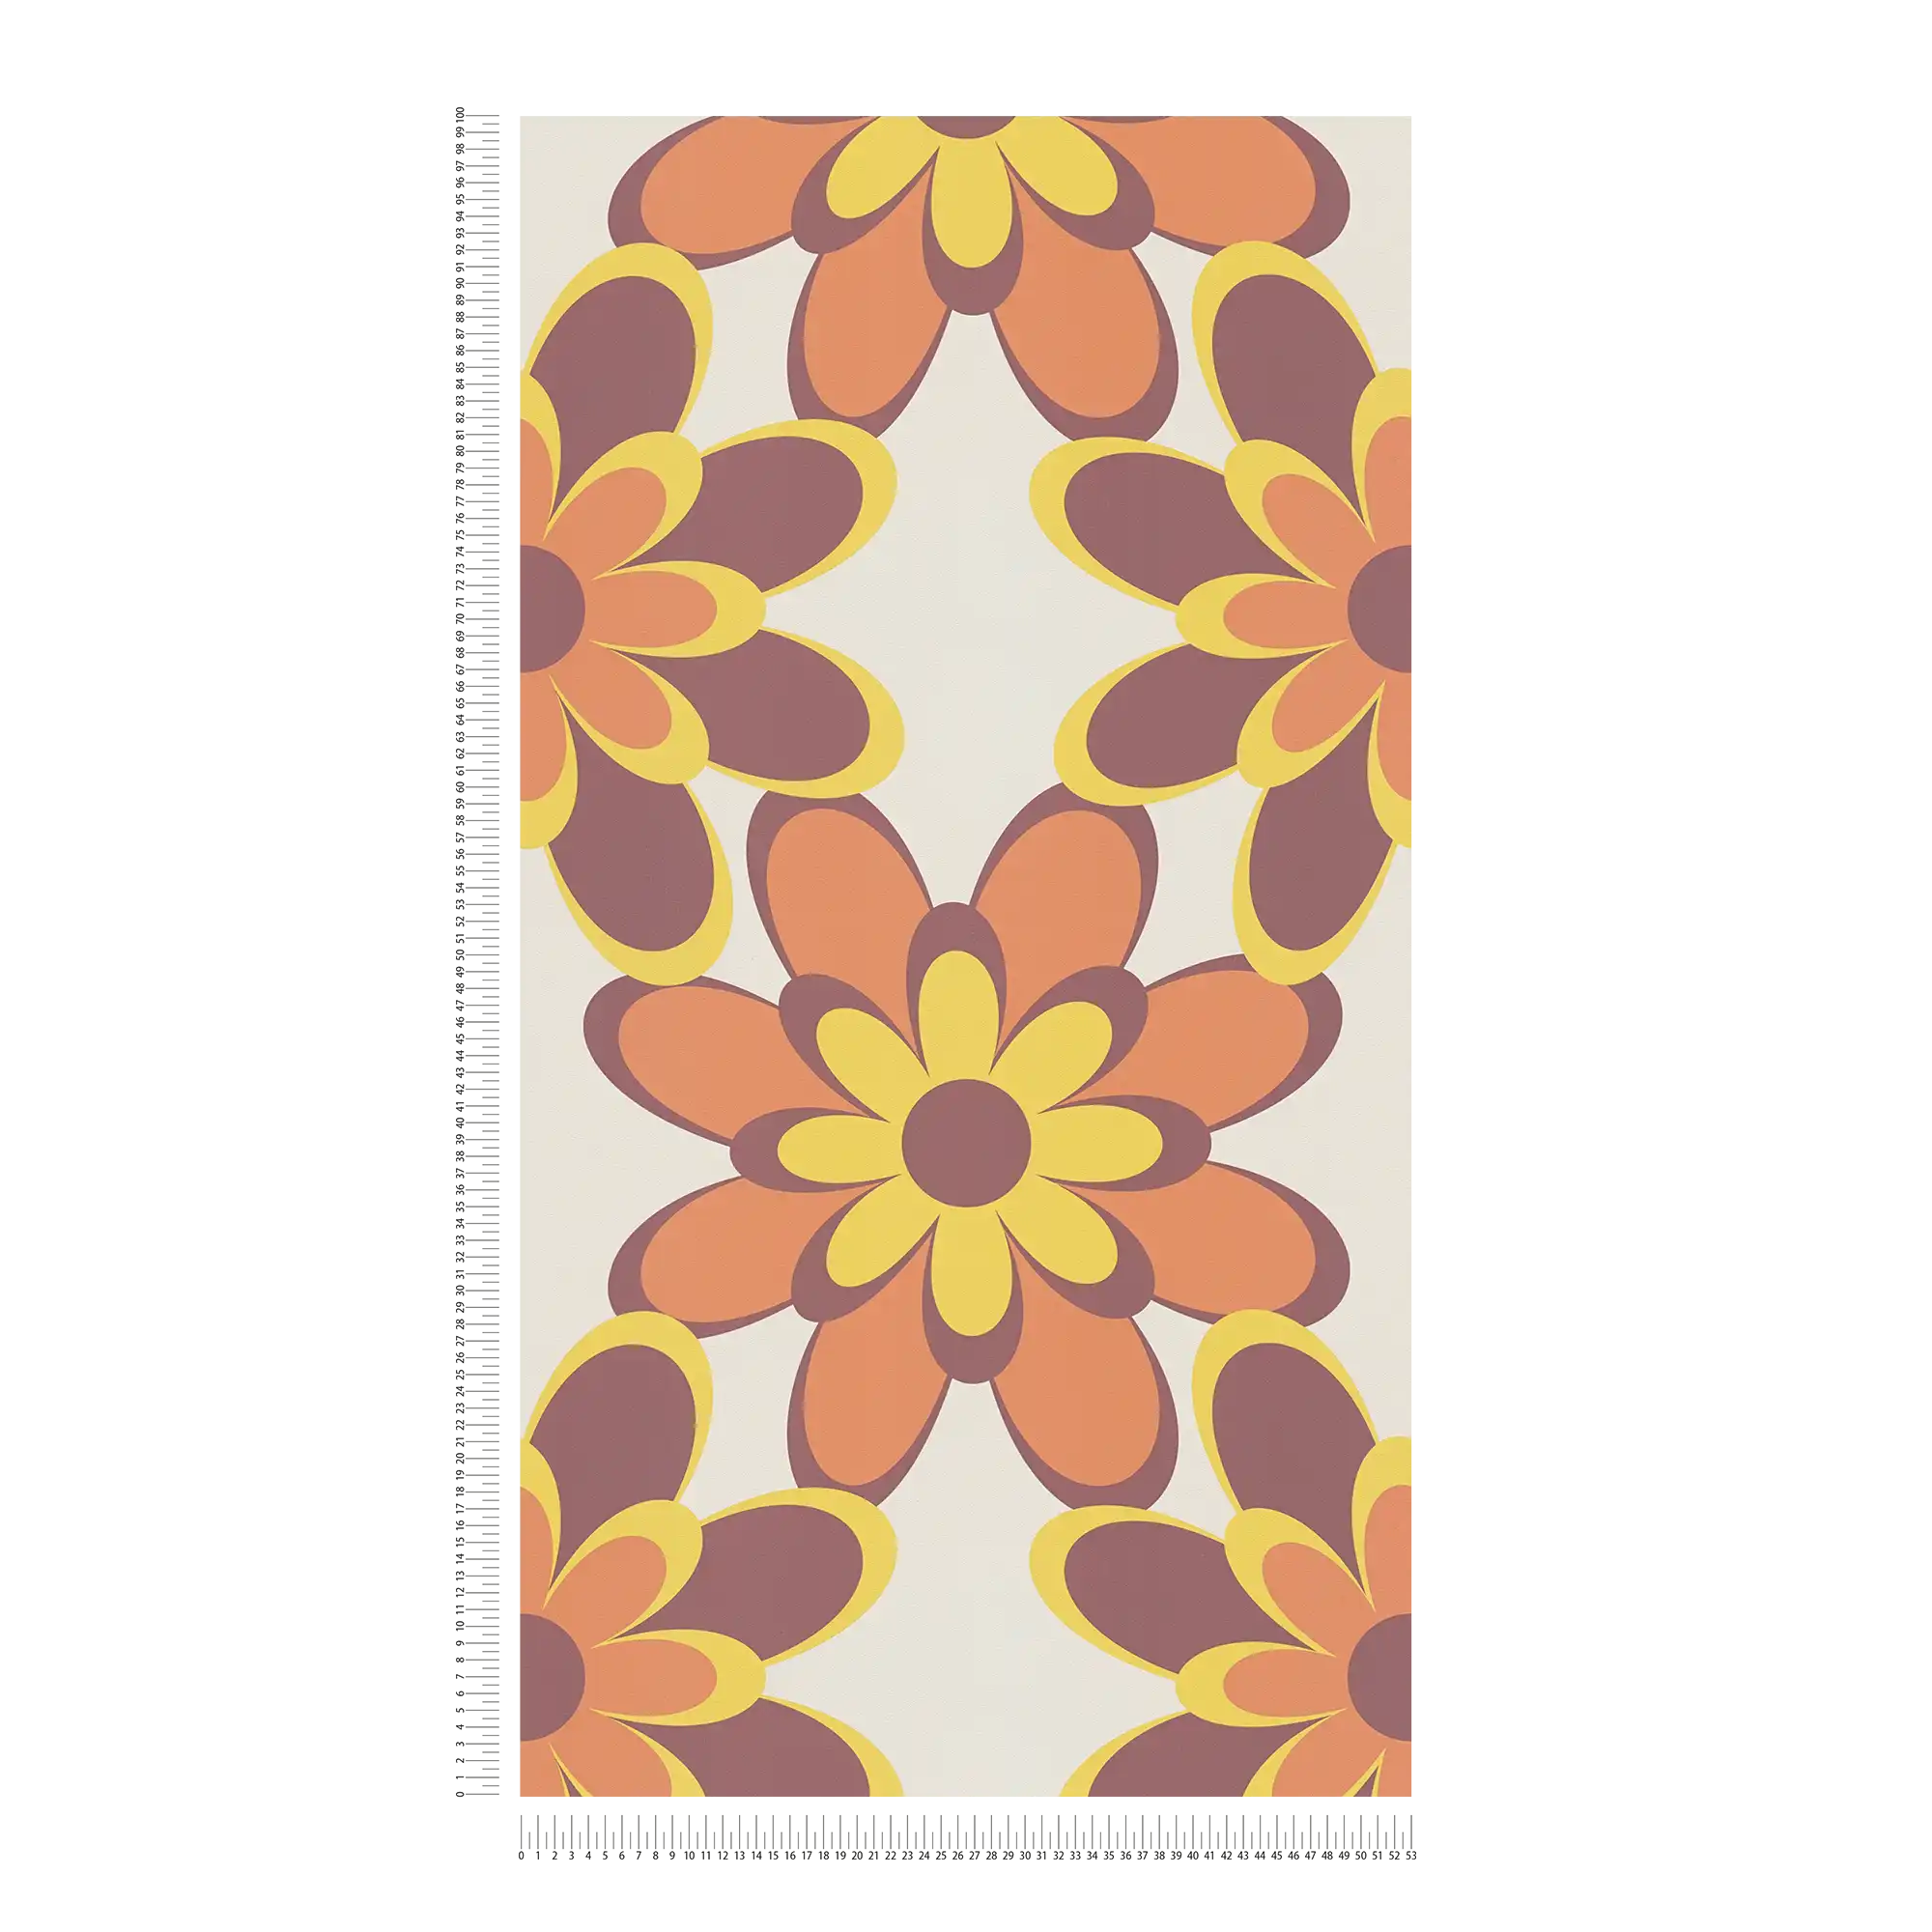             Retro wallpaper 70s floral pattern - orange, yellow, brown
        